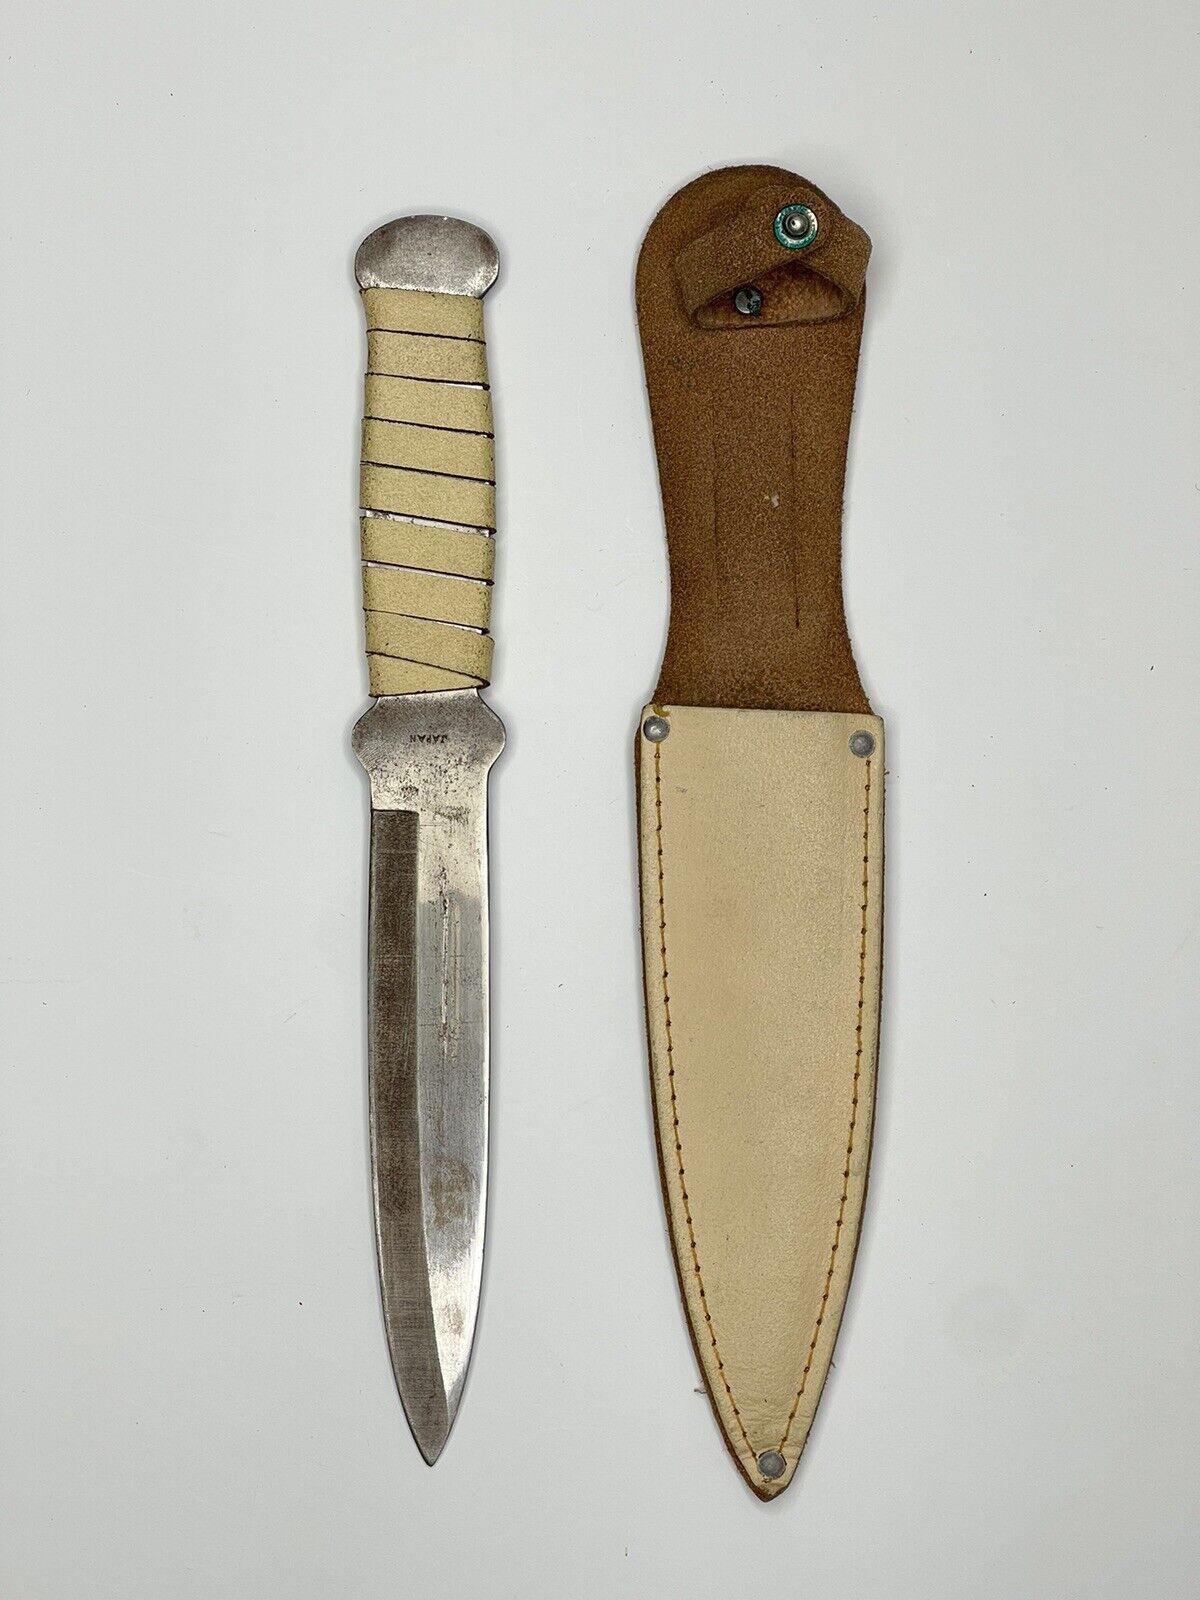 Fixed Blade Knife Japan Tan Leather Handle Sheath Balanced Throwing Vintage